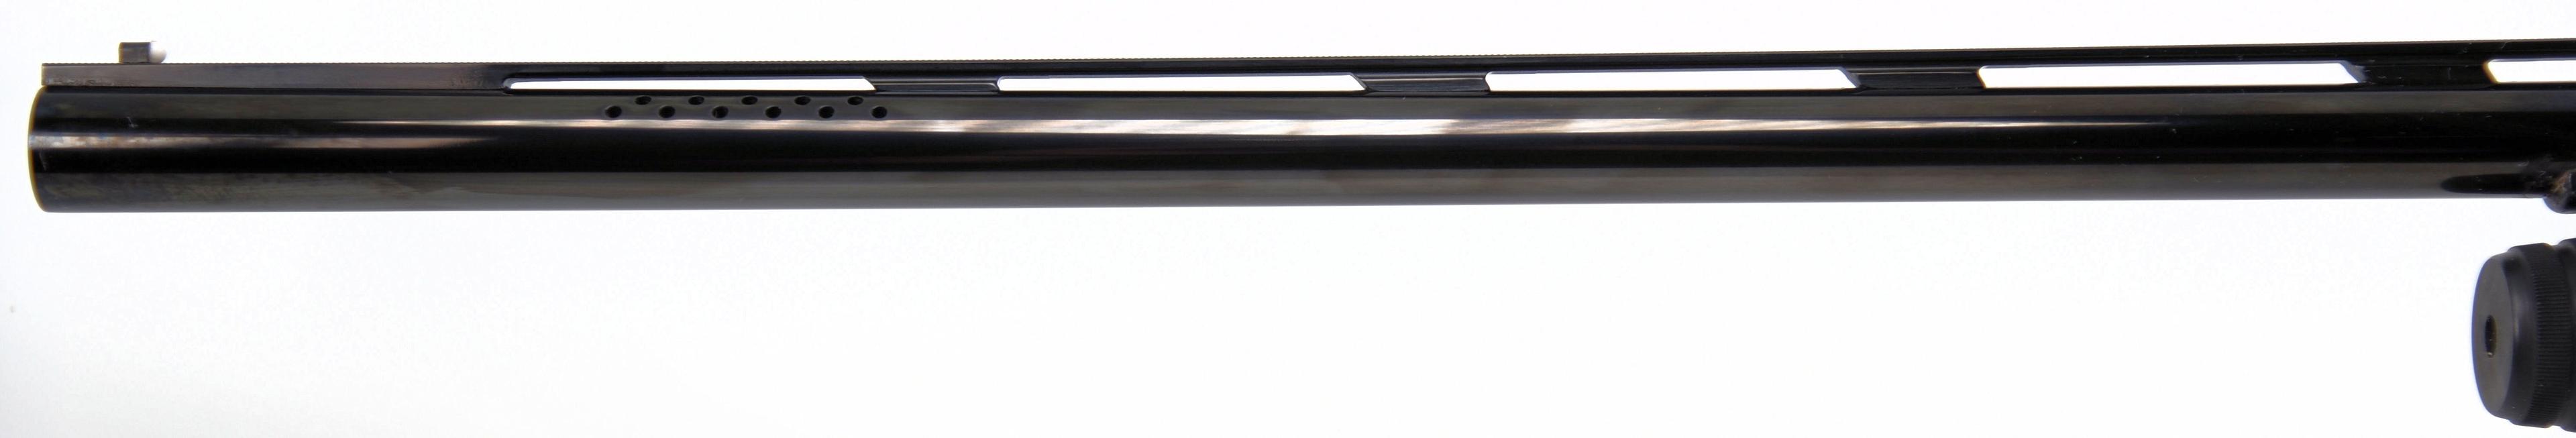 AKKAR/Imp by CZ-USA 628 Field Select Pump Action Shotgun